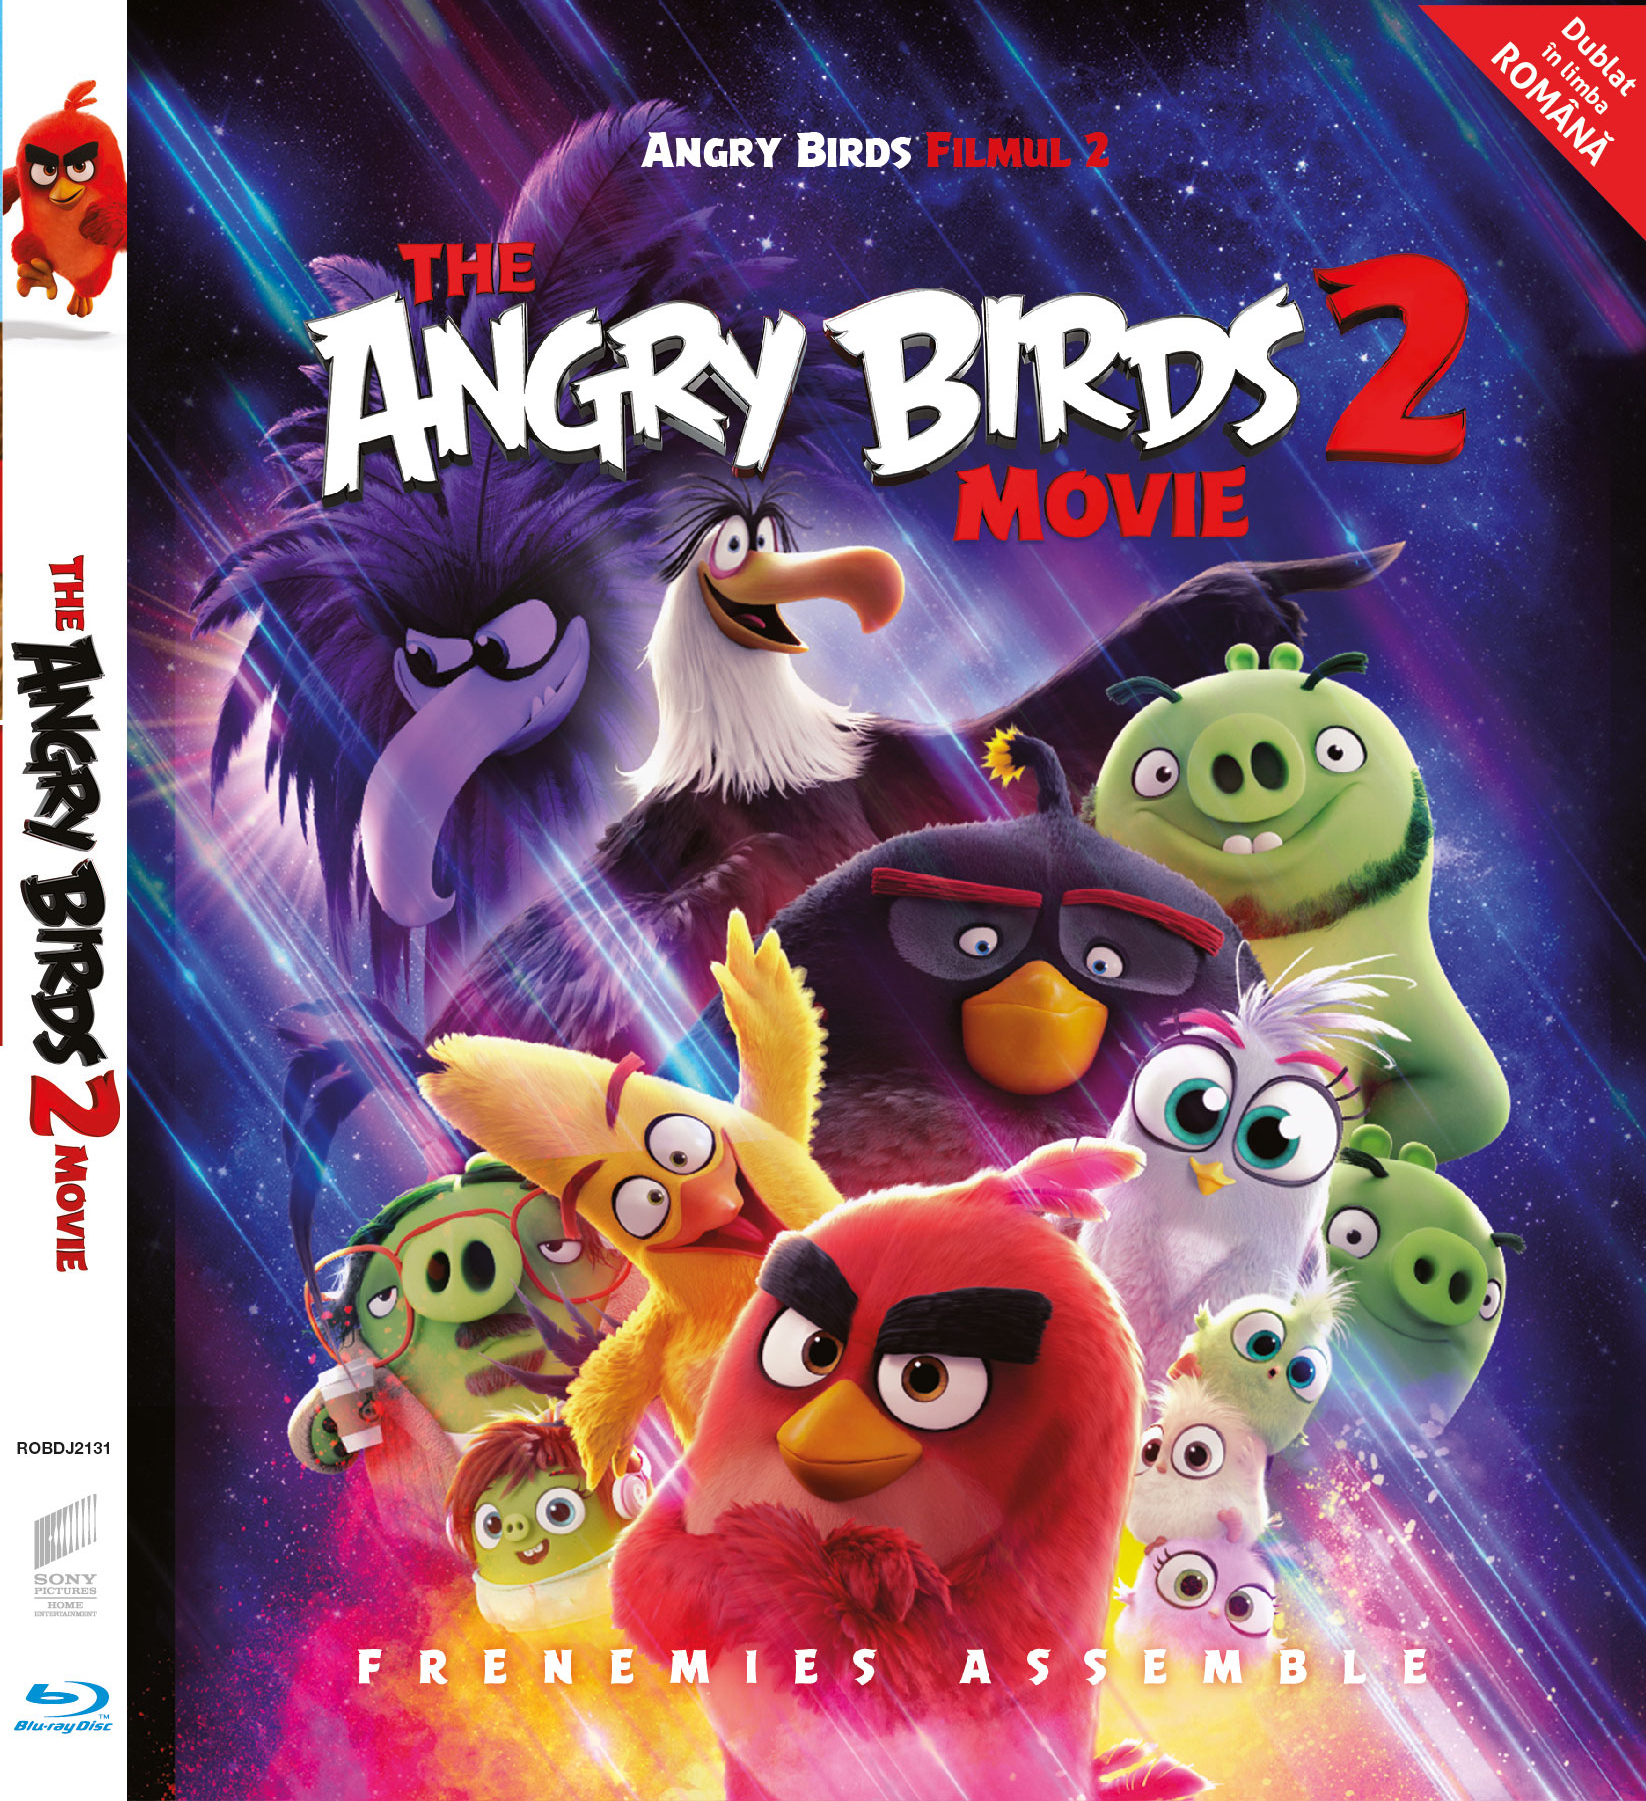 Angry Birds filmul 2 / The Angry Birds Movie 2 (Blu Ray Disc) | Thurop Van Orman, John Rice